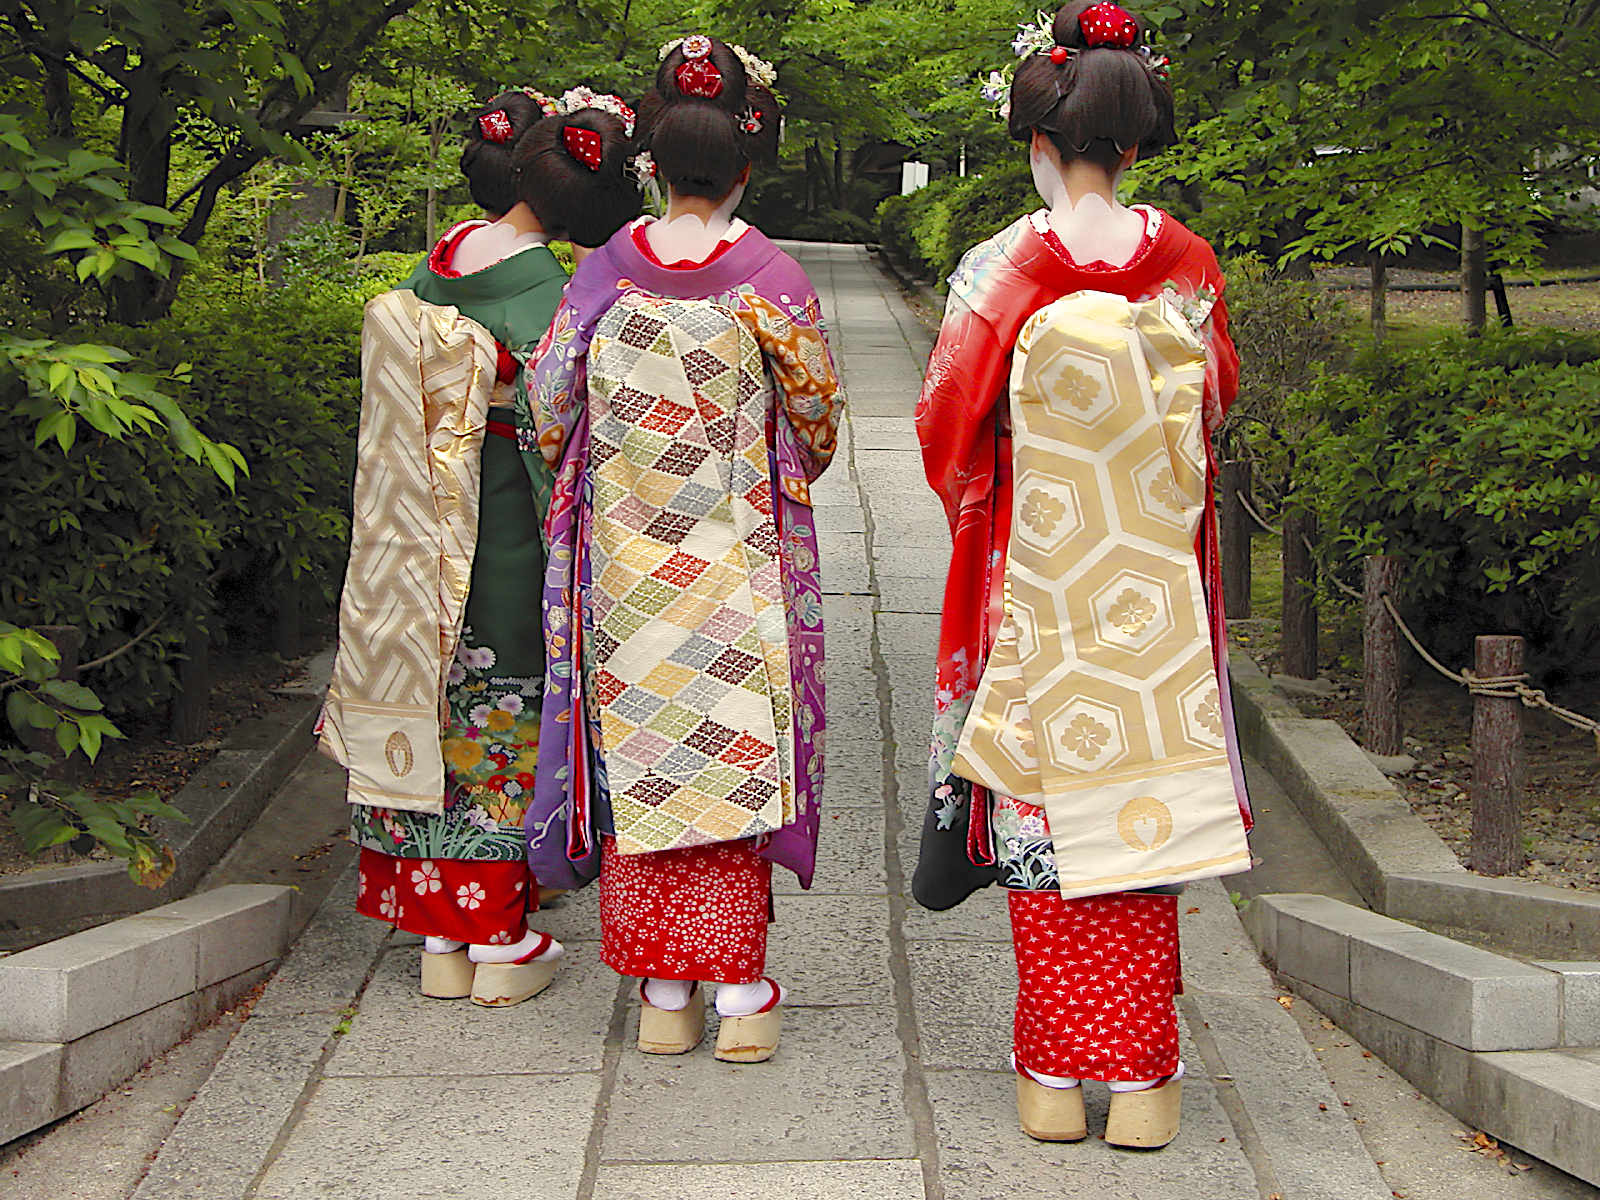 Apprentice geisha (known as maiko) in resplendent kimono